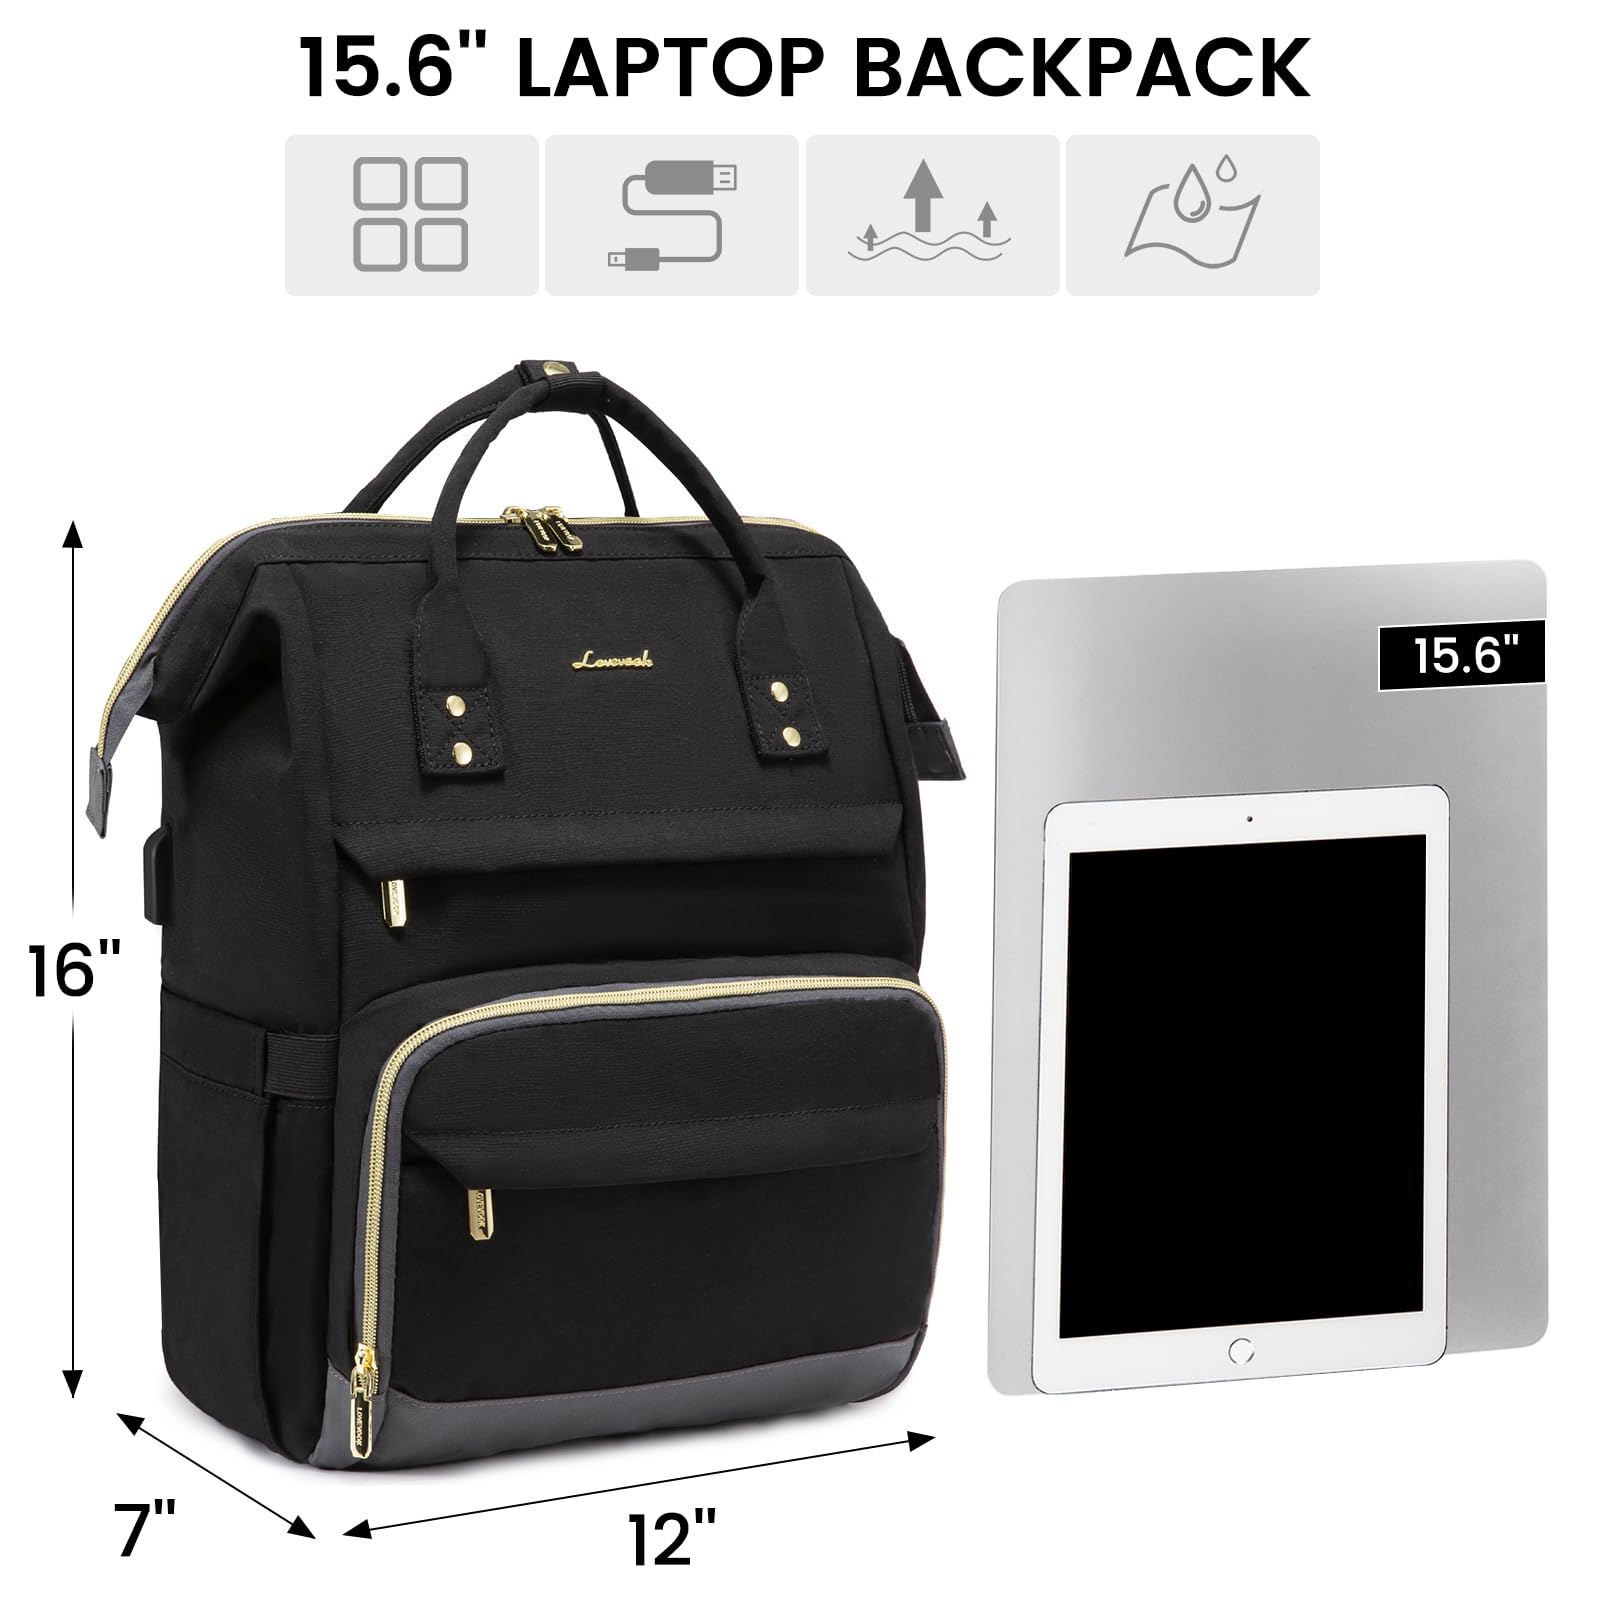 LOVEVOOK Laptop Backpack Women,15.6 Inch Wide-open Travel Computer Backpack Purse for Women with USB Port,Waterproof Teacher Nurse Work Laptop Bag College Back Pack,Black-Grey